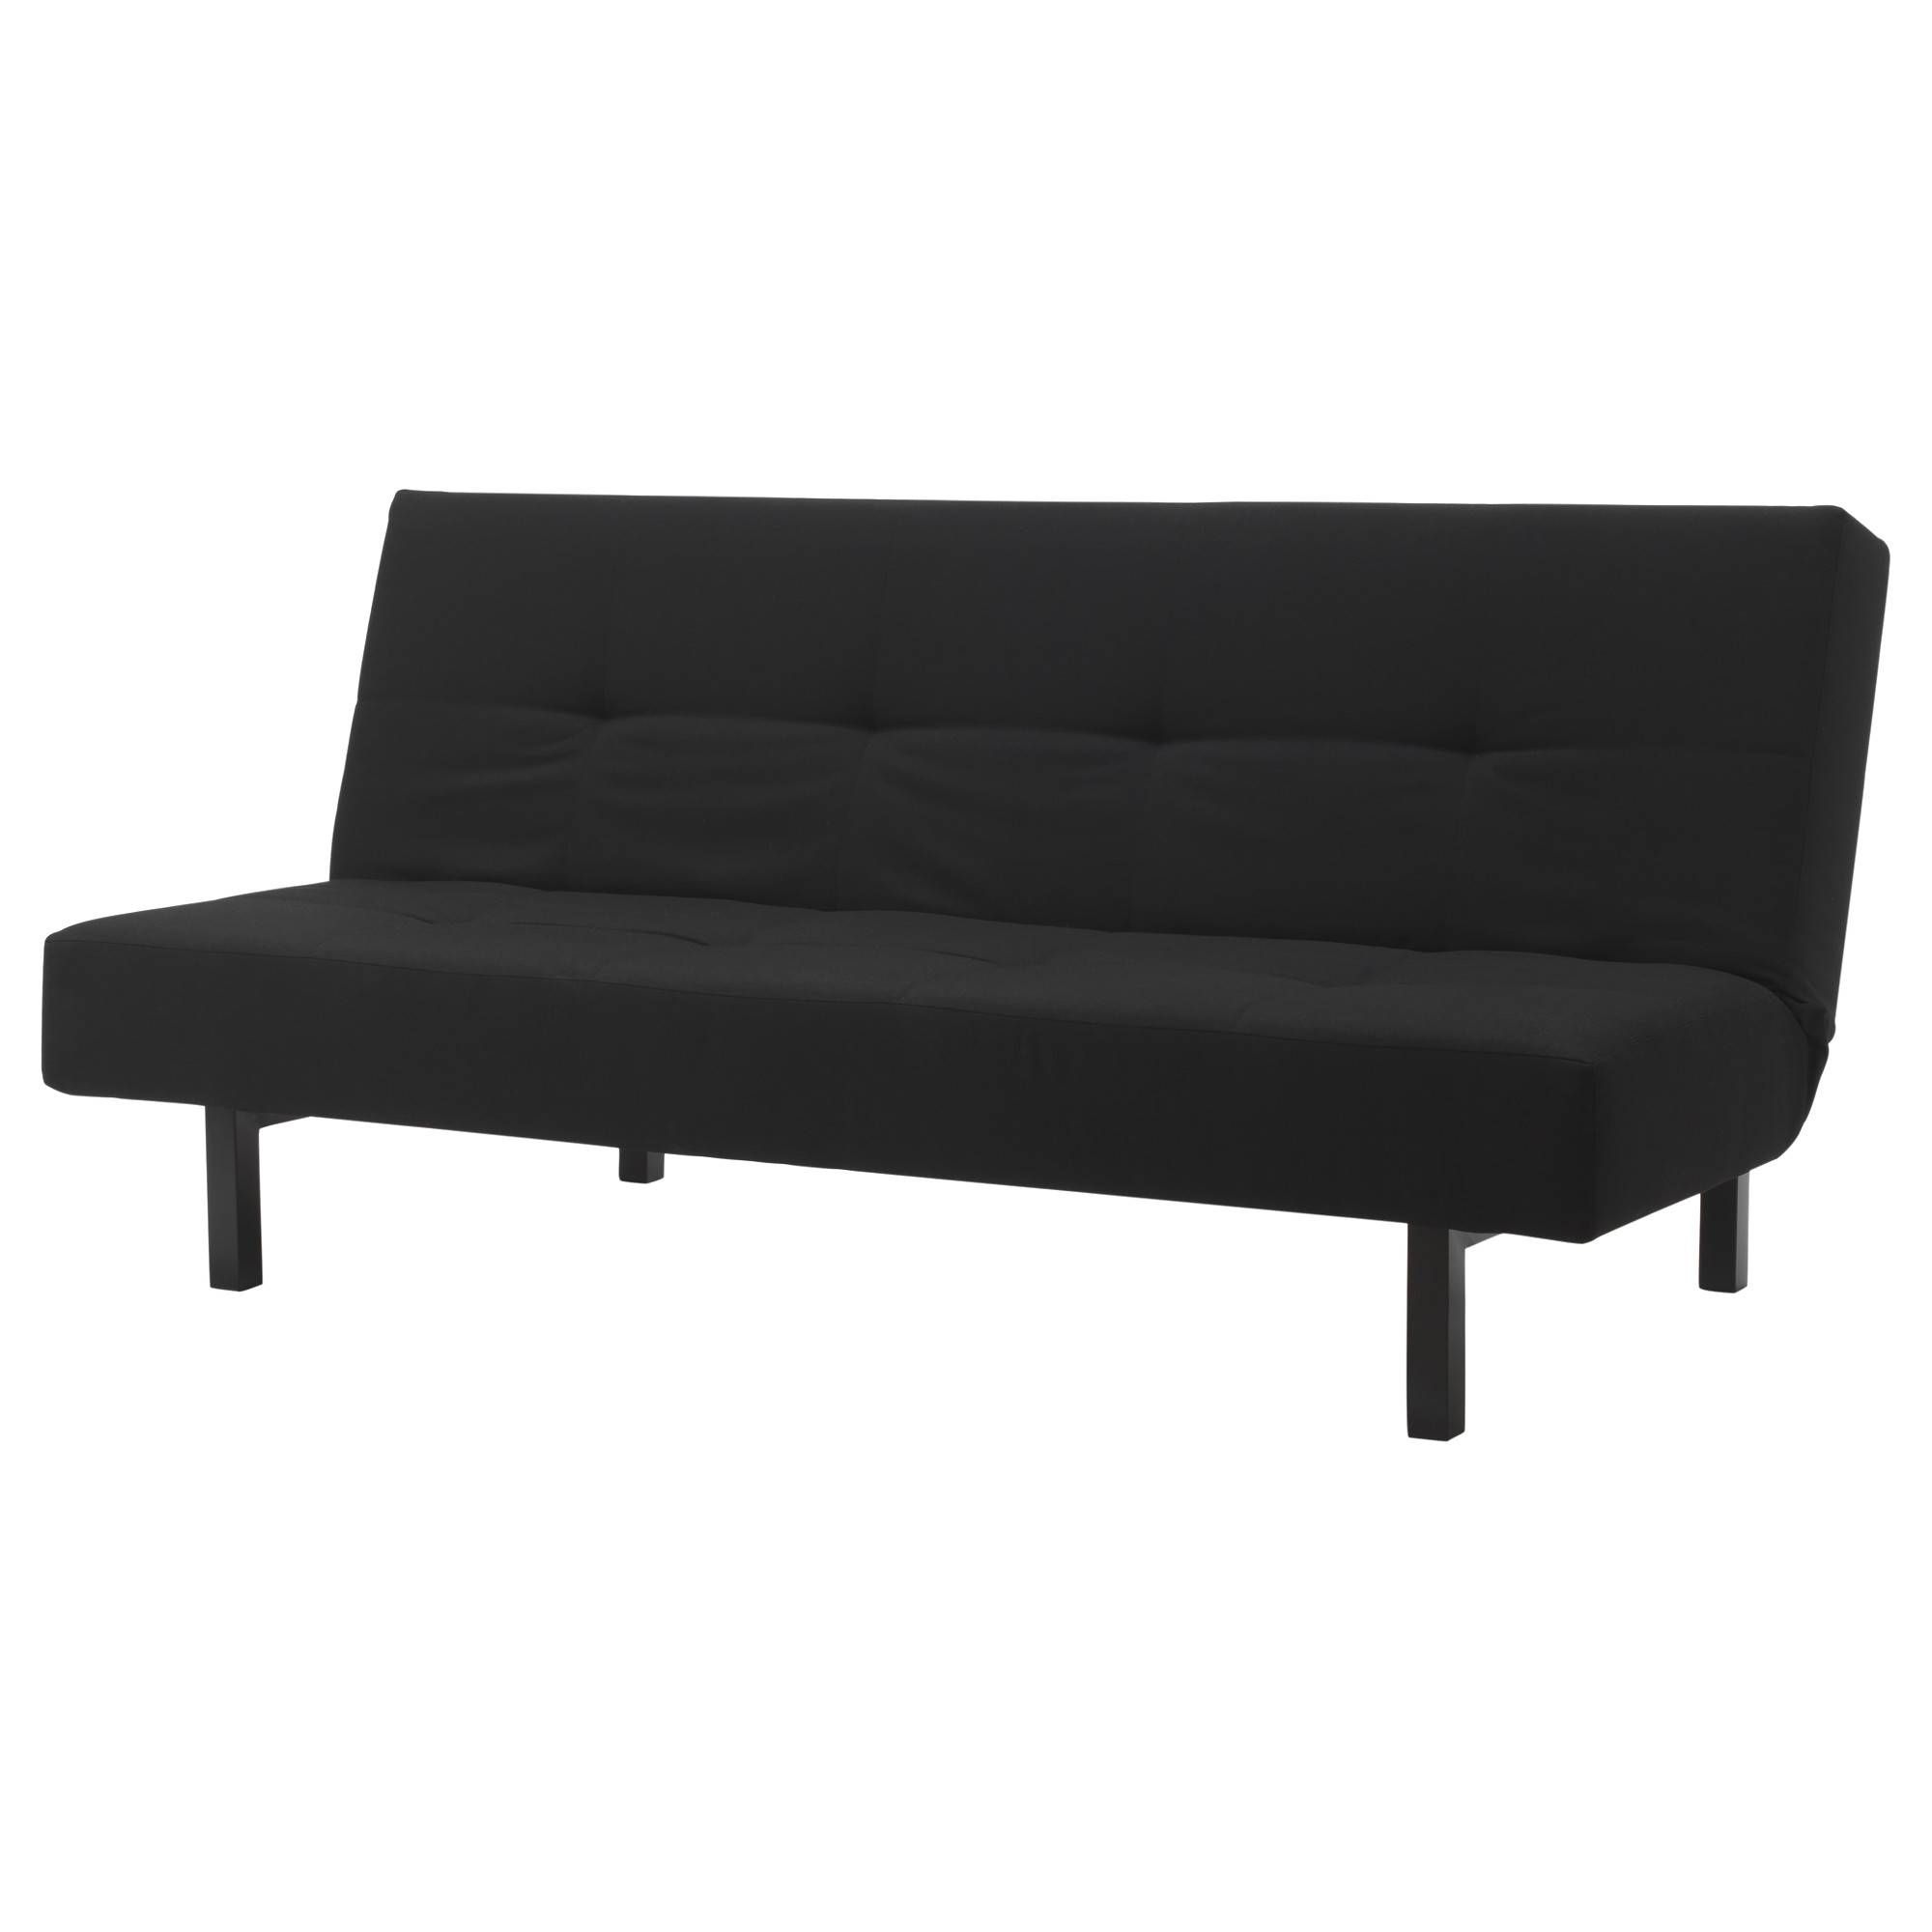 Balkarp Sleeper Sofa – Knisa Black – Ikea Throughout Sleep Number Sofa Beds (View 10 of 15)